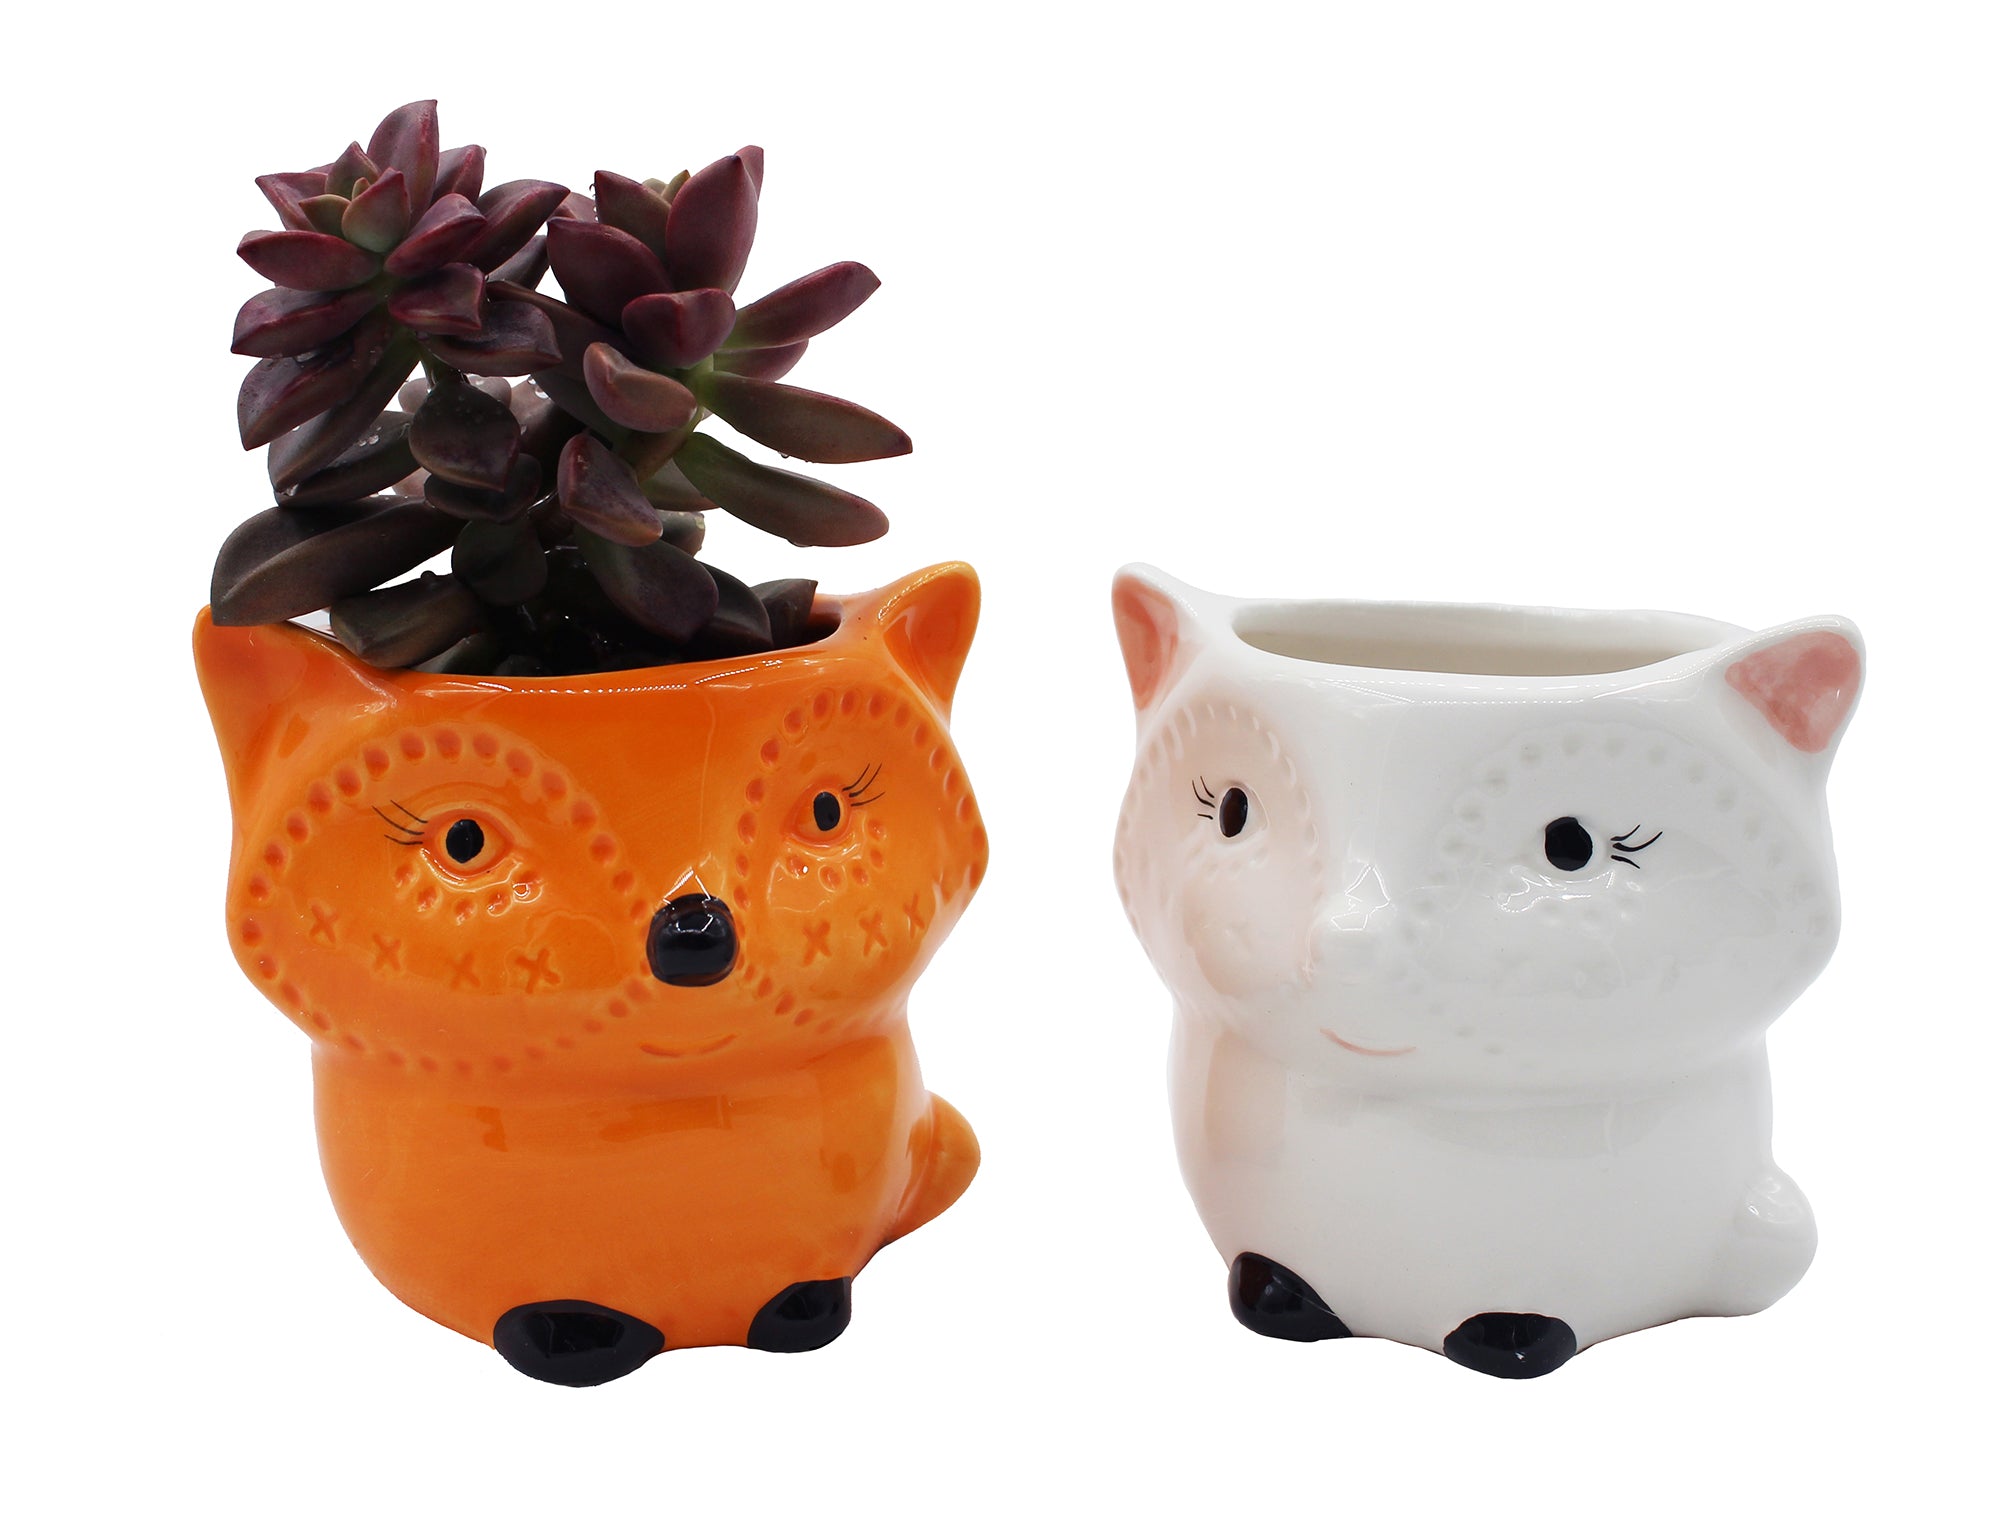 Fox Succulent Planters 2 Pack Ceramic Flower Pots with Drainage Hole